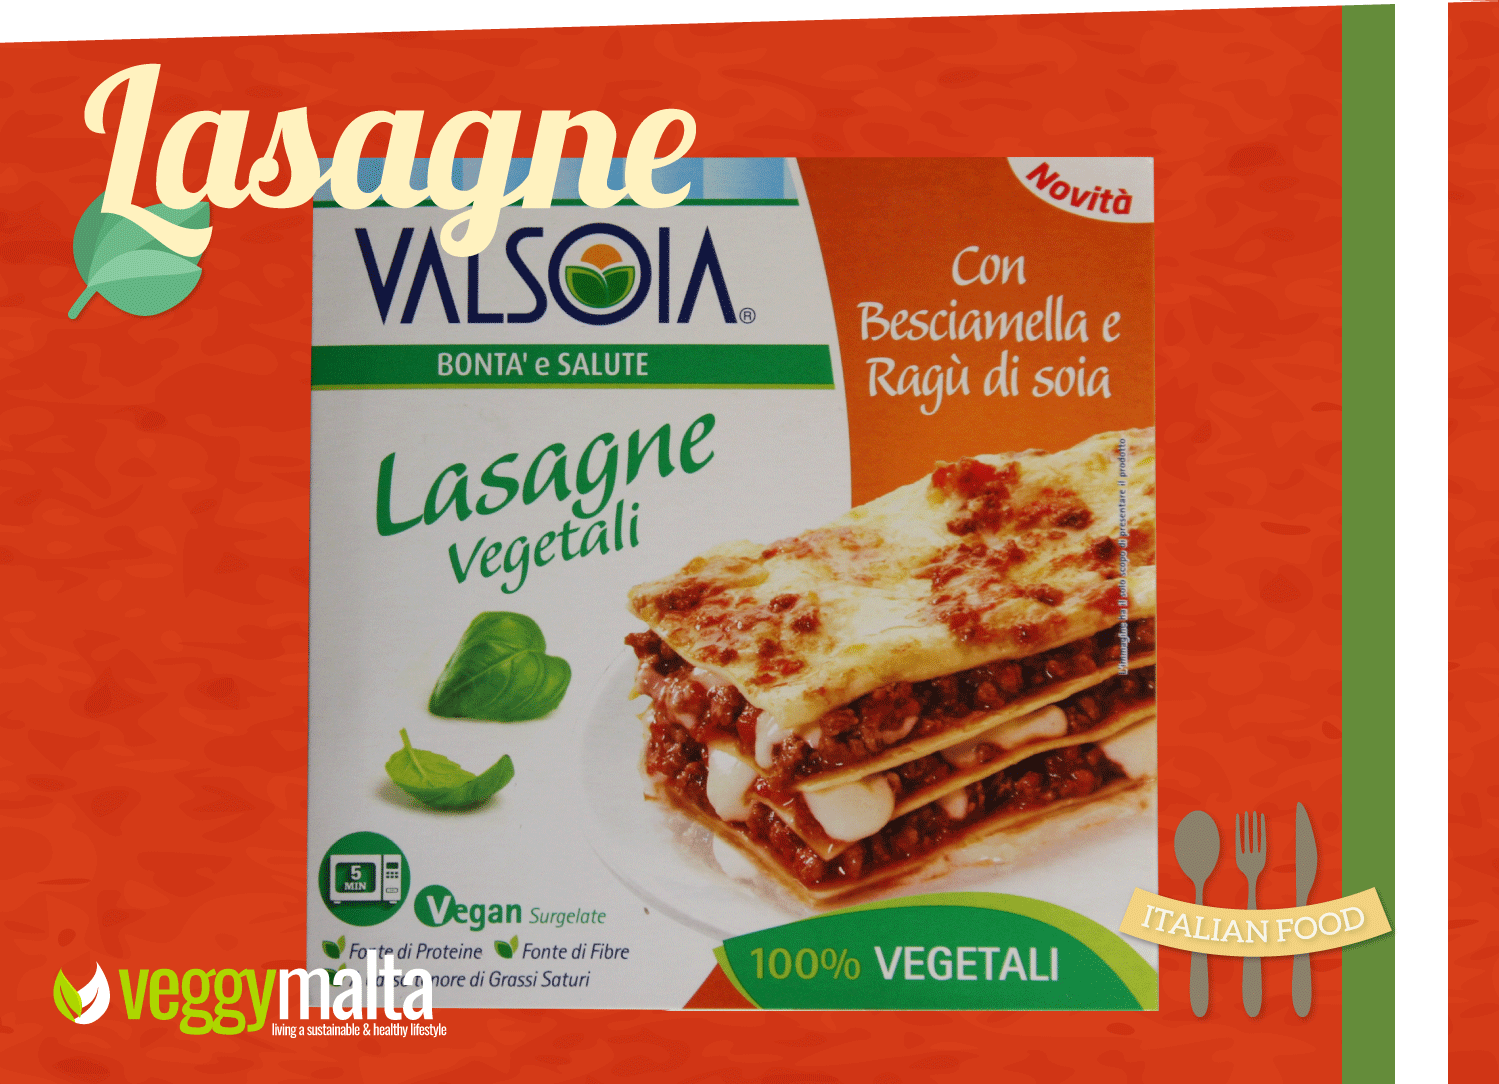 valsoia-lasagne-vegetale-box